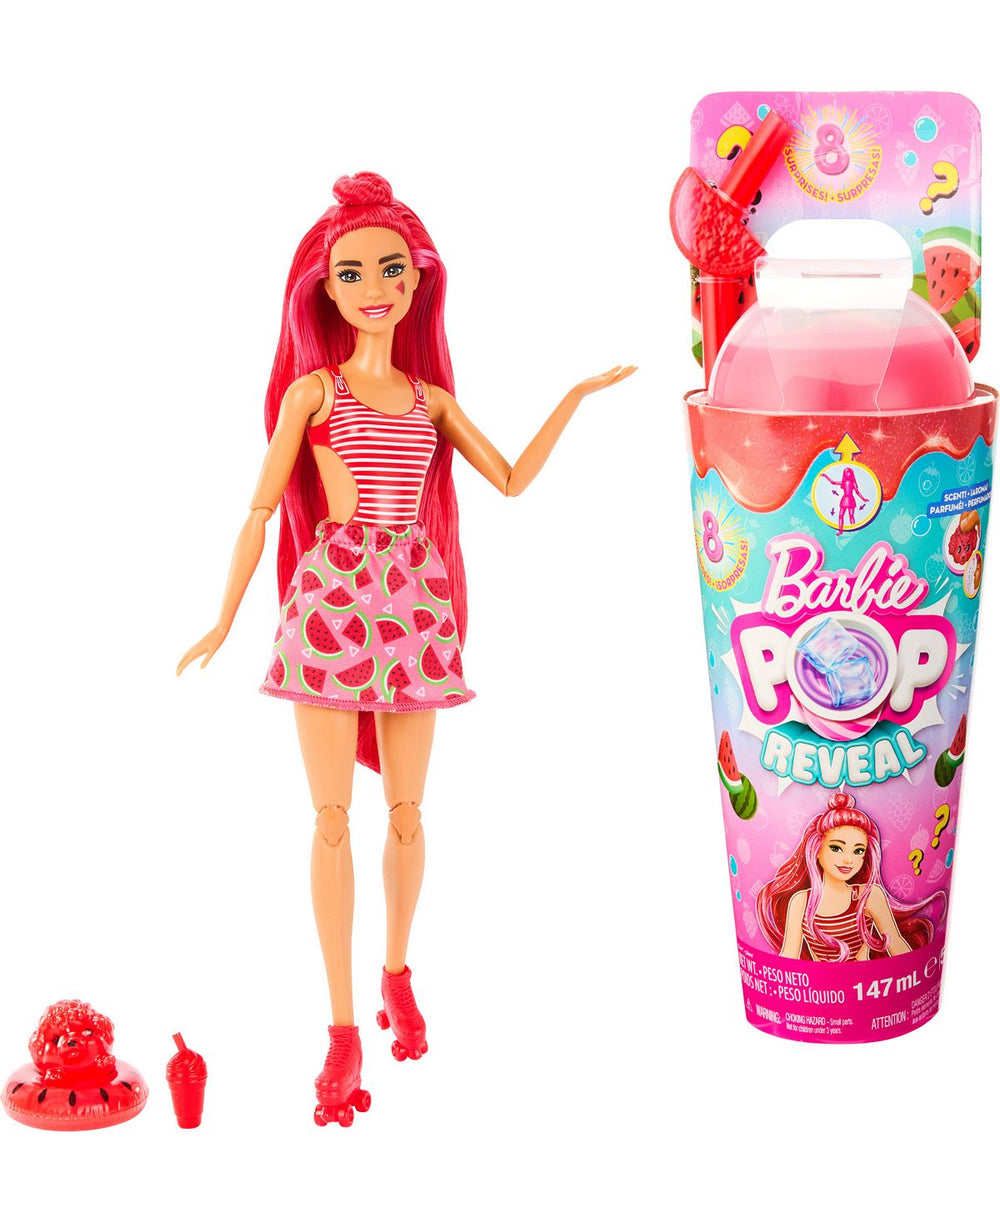 Barbie Pop Reveal Fruit Series - Watermelon Crush Doll with 8 Surprises